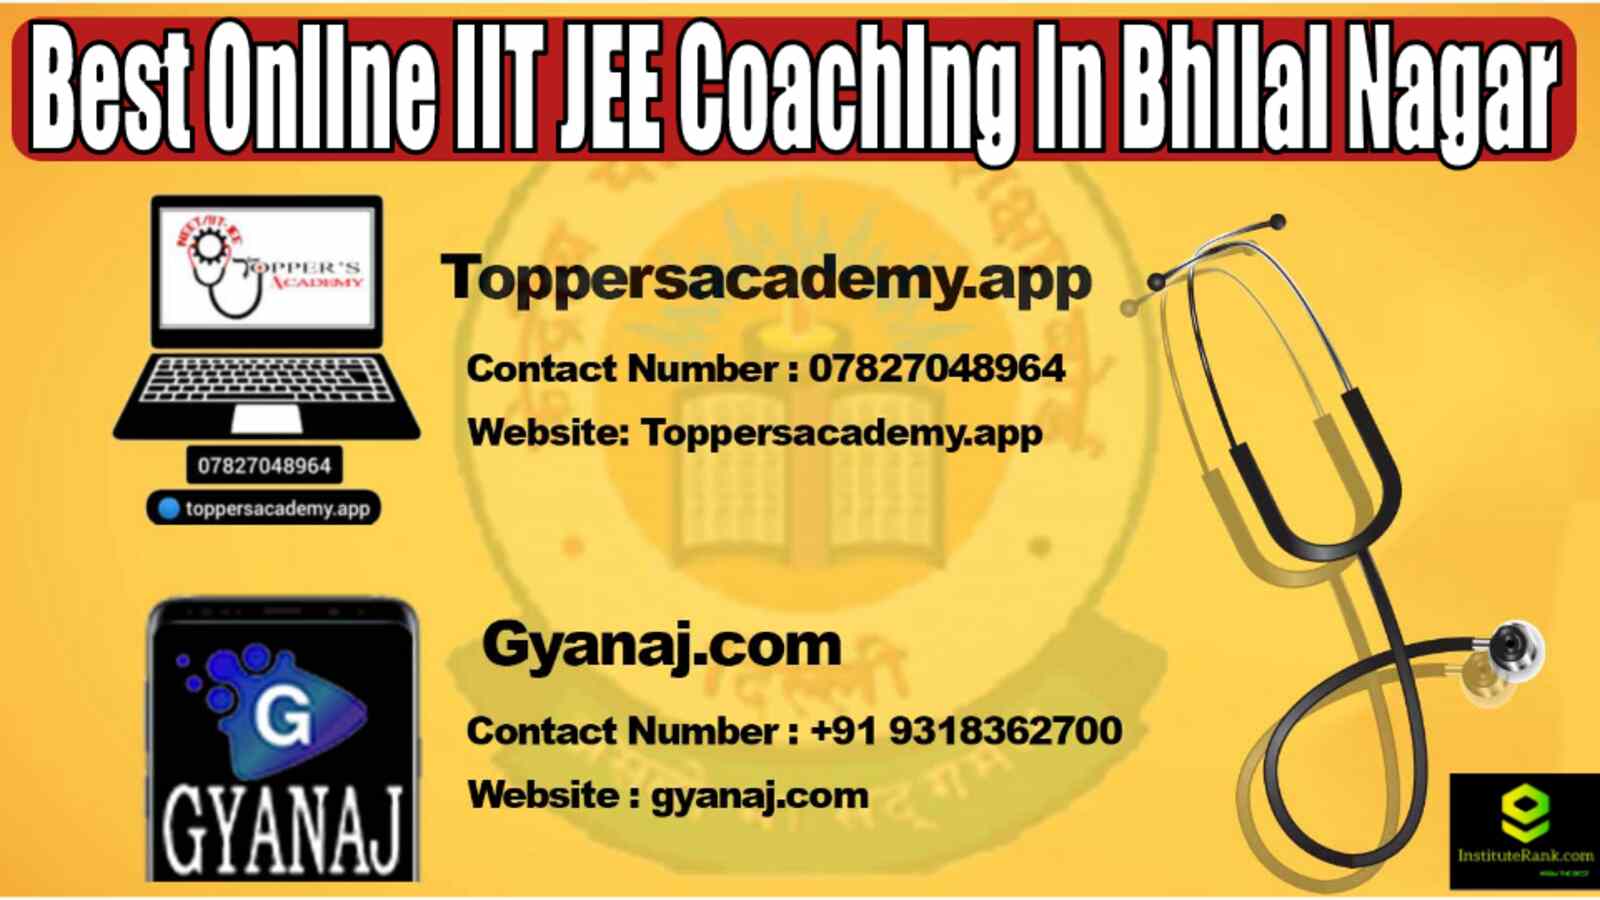 Best Online IIT JEE Coaching in Bhilai Nagar 2022